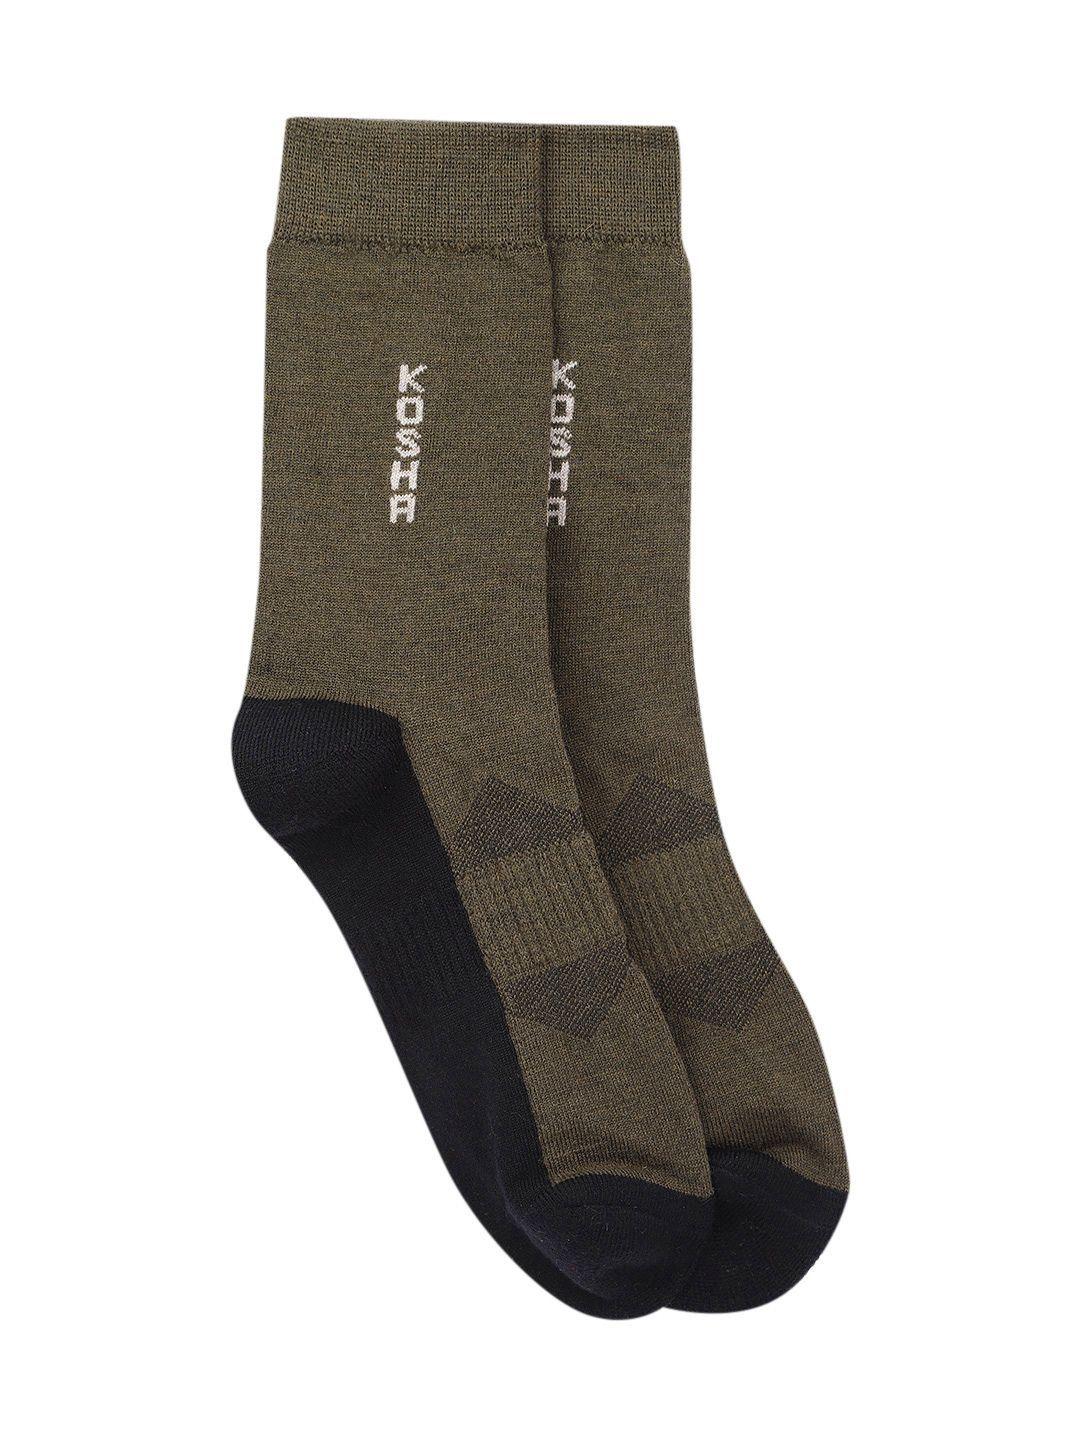 kosha men olive & black merino technical woolen socks